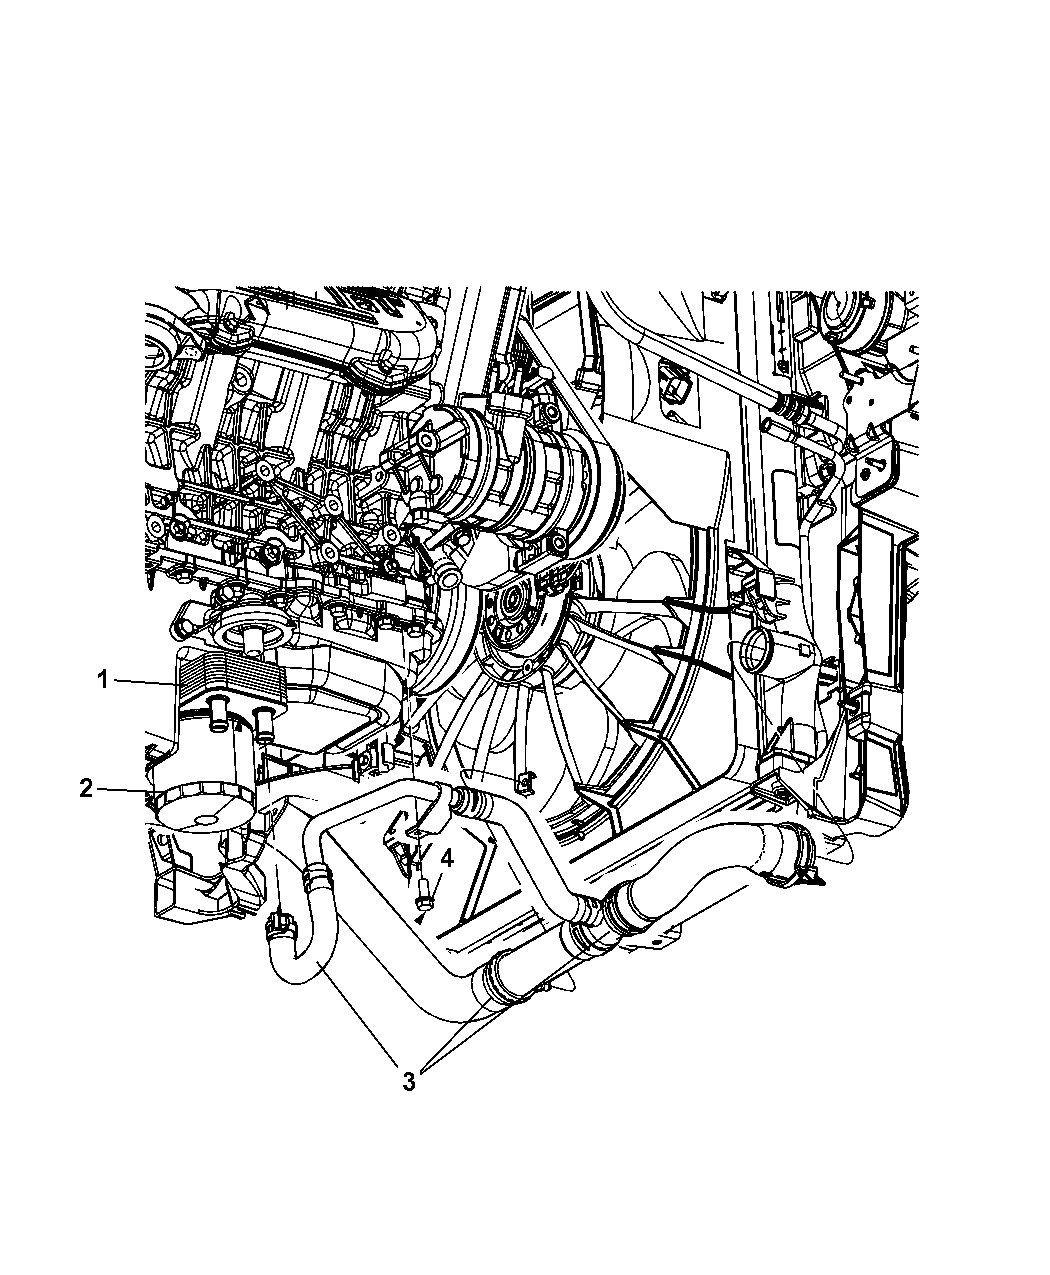 Circuit Electric For Guide: 2007 Dodge Nitro 3 7l Engine Diagram